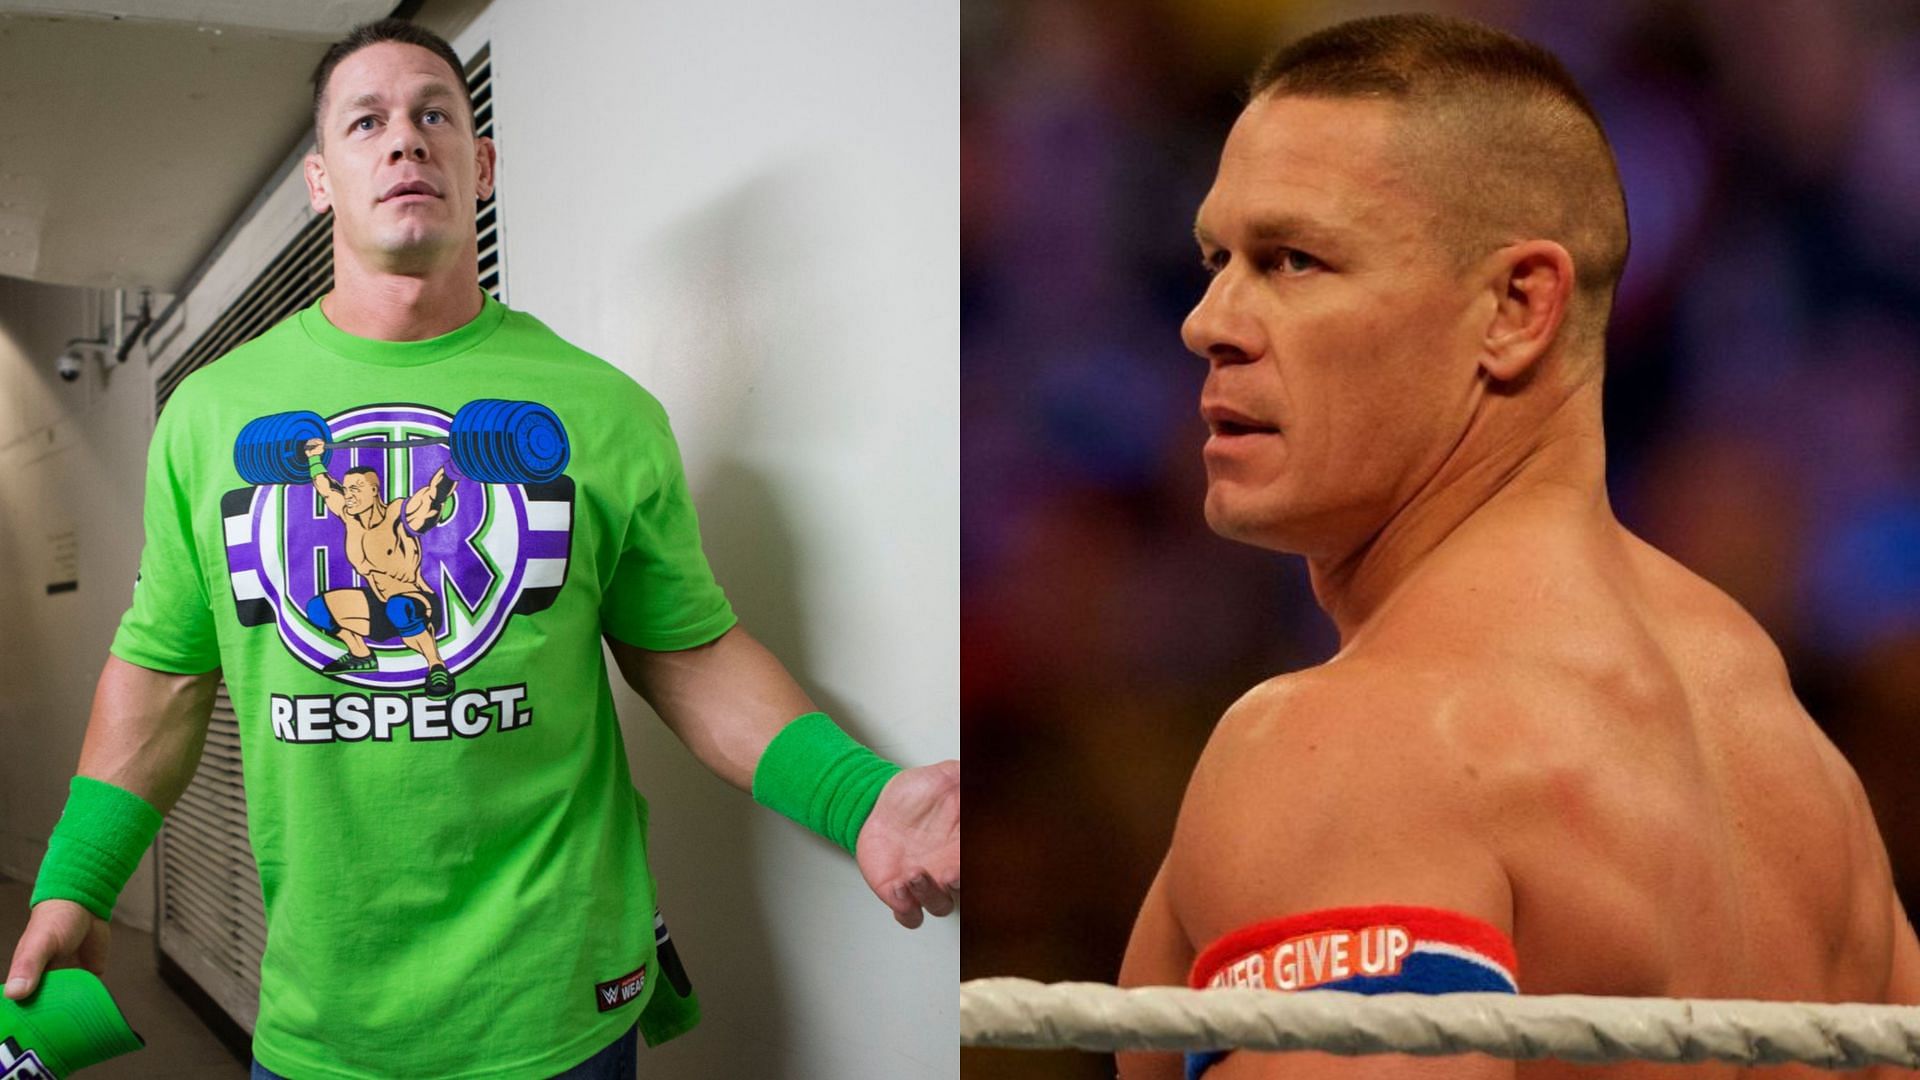 WWE legend John Cena will face Austin Theory at WrestleMania 39